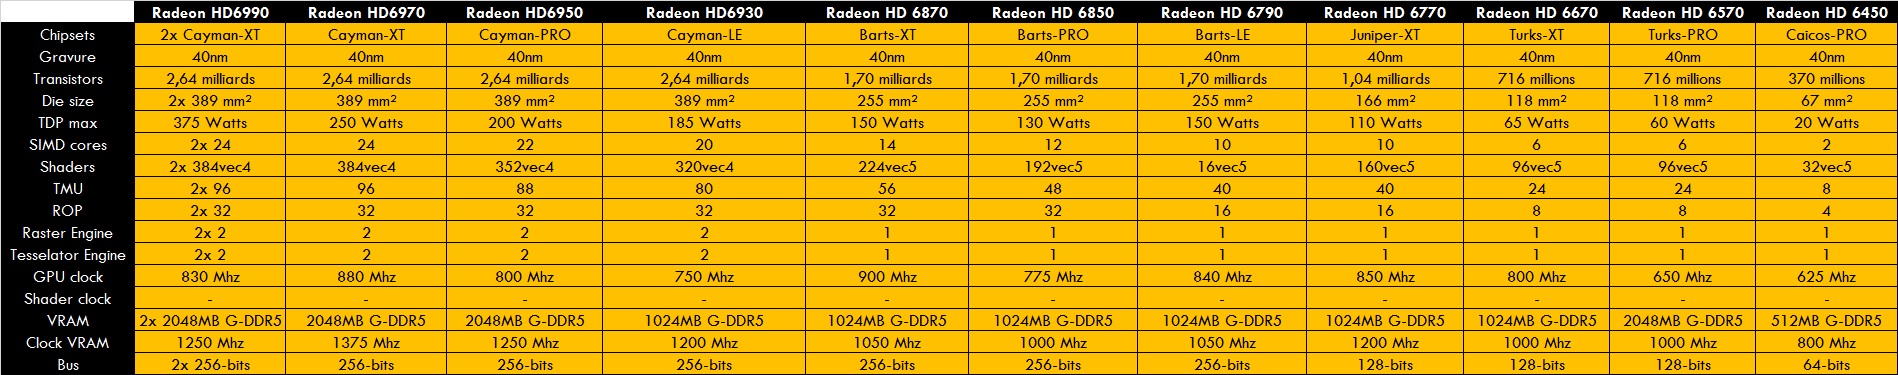 0_1490712327328_Radeon HD6000.jpg